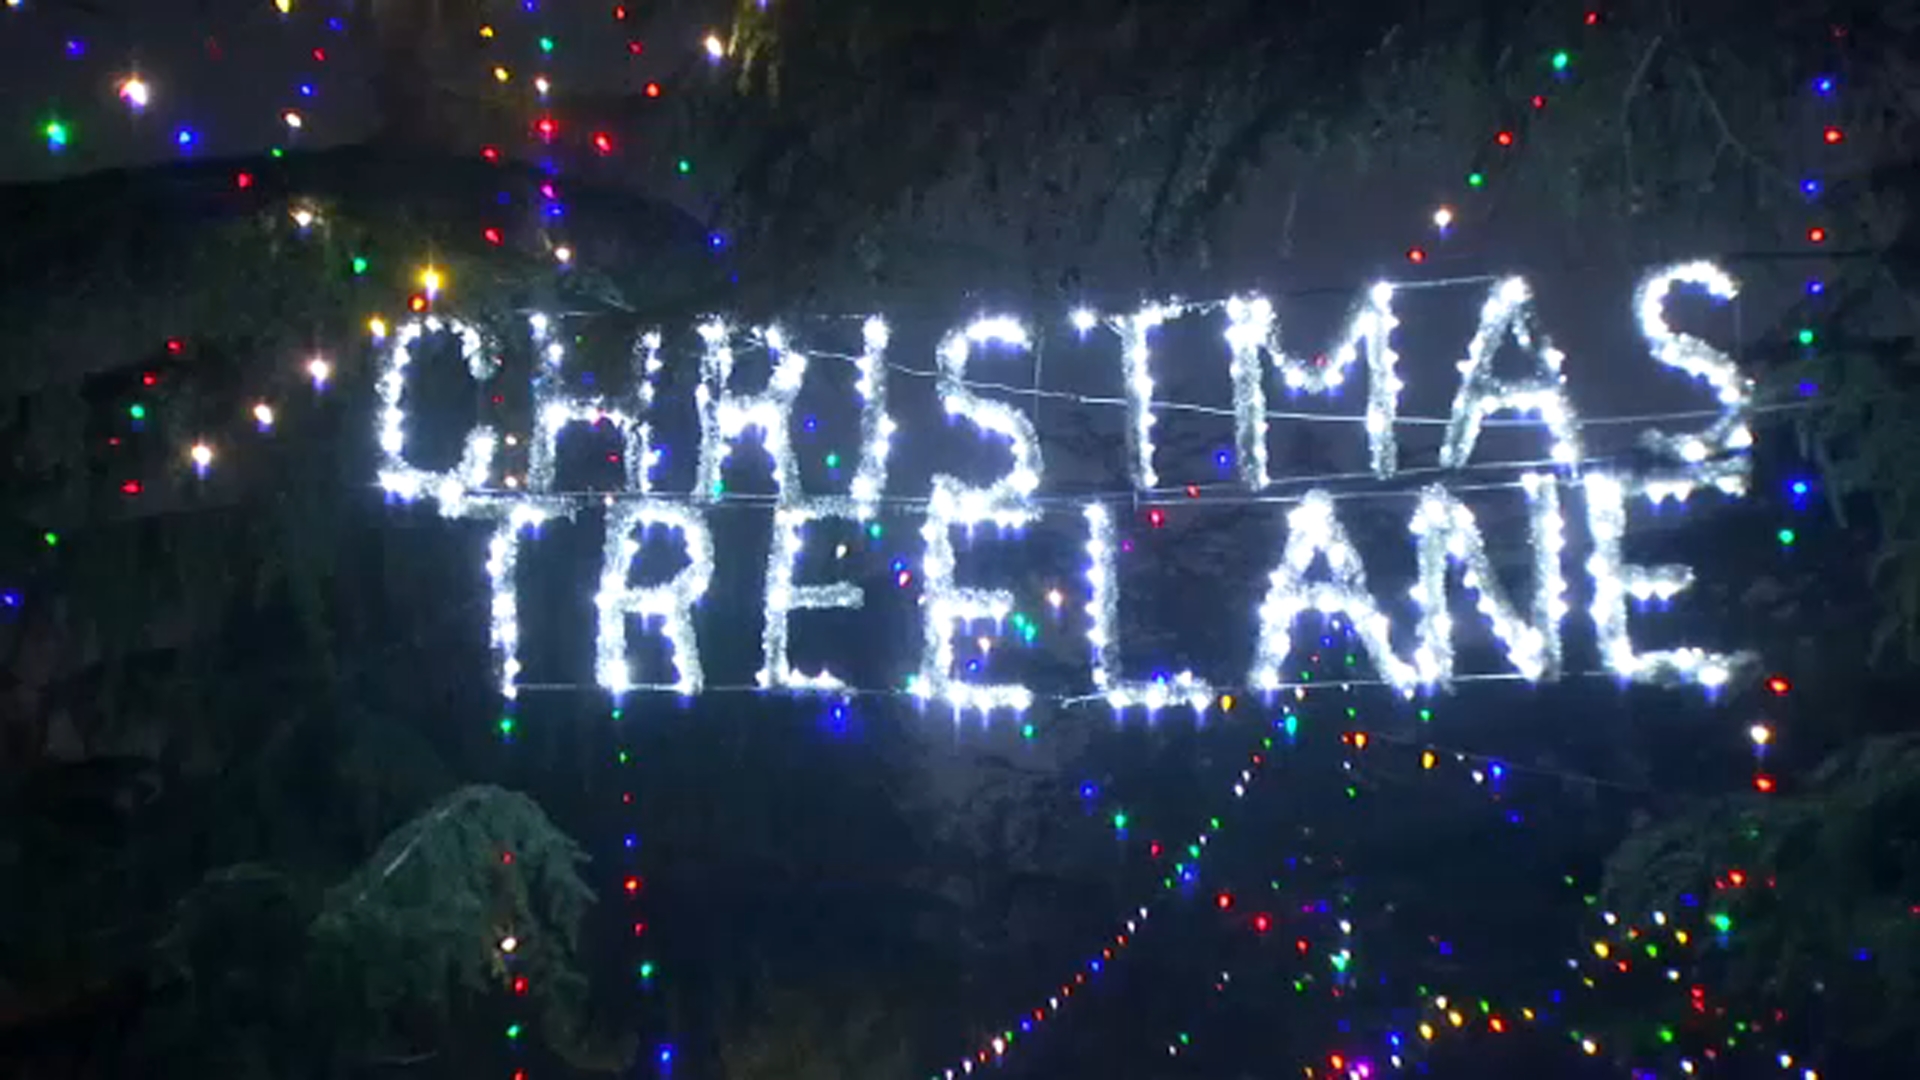 Fresno's Christmas Tree Lane brings holiday cheer for 100th year - ABC30 Fresno